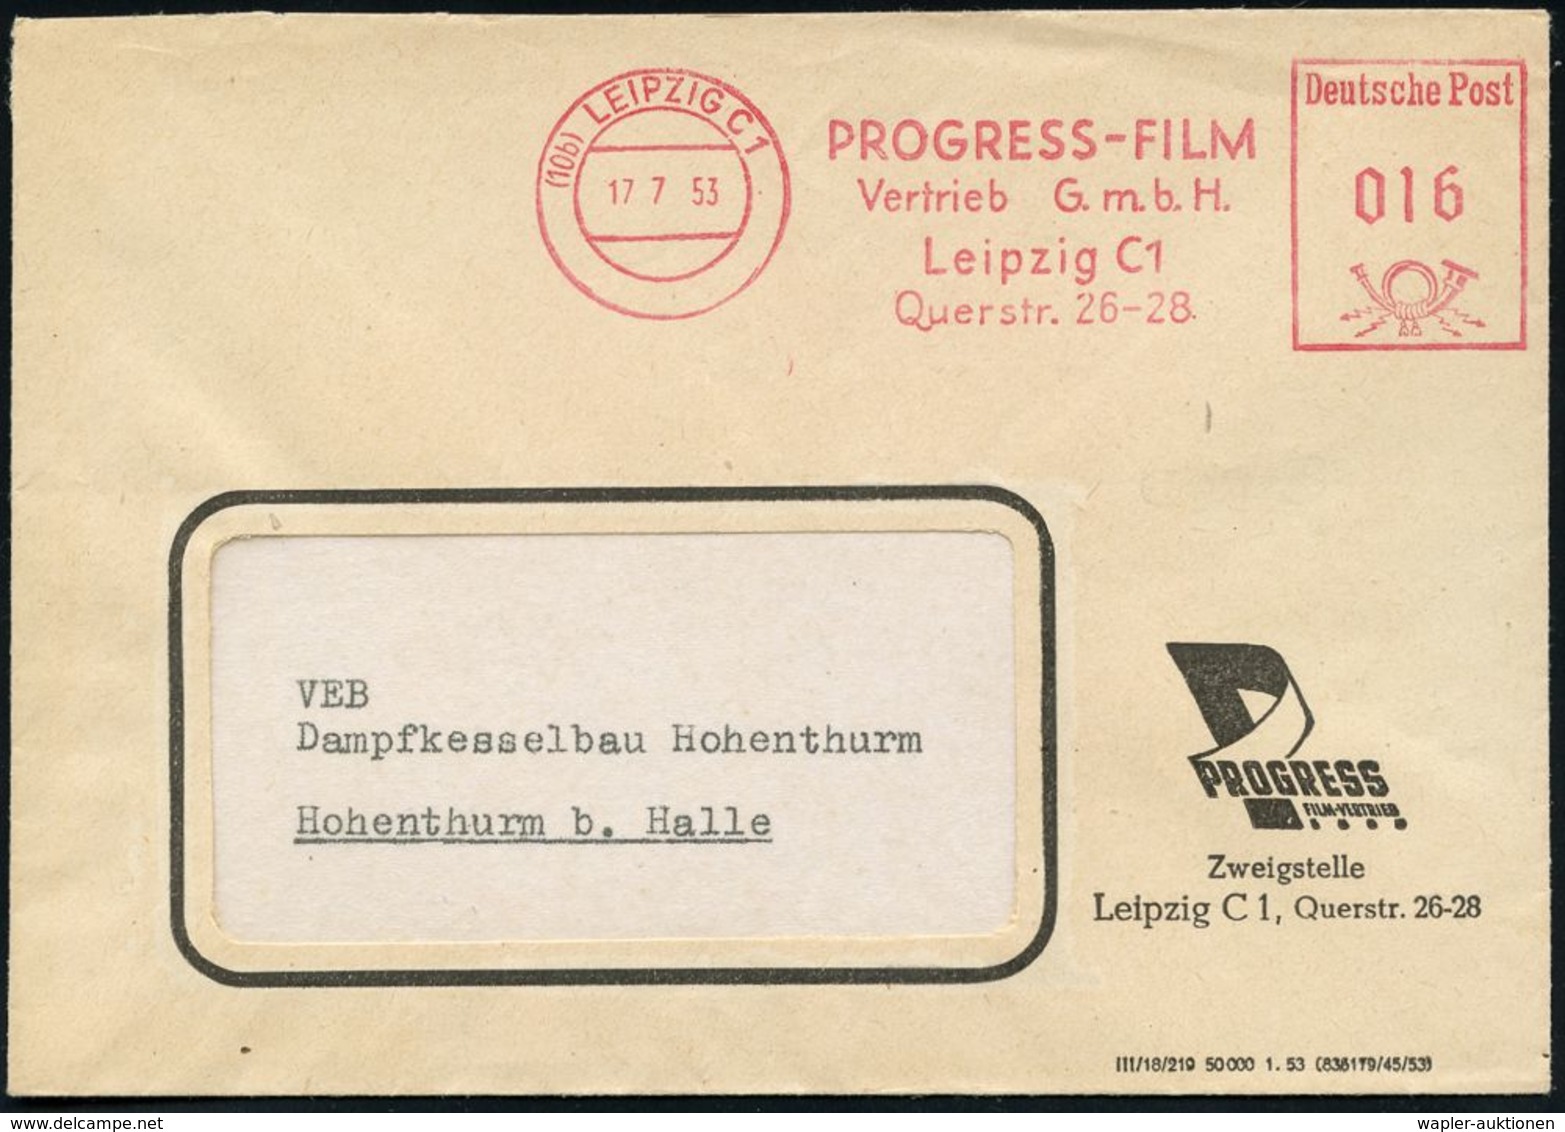 FILM / FILMVERLEIH / FILMTITEL / KINO : (10b) LEIPZIG C1/ PROGRESS-FILM/ Vertriebs GmbH/ ..Querstr. 26-28 1953 (17.7.) A - Cinema